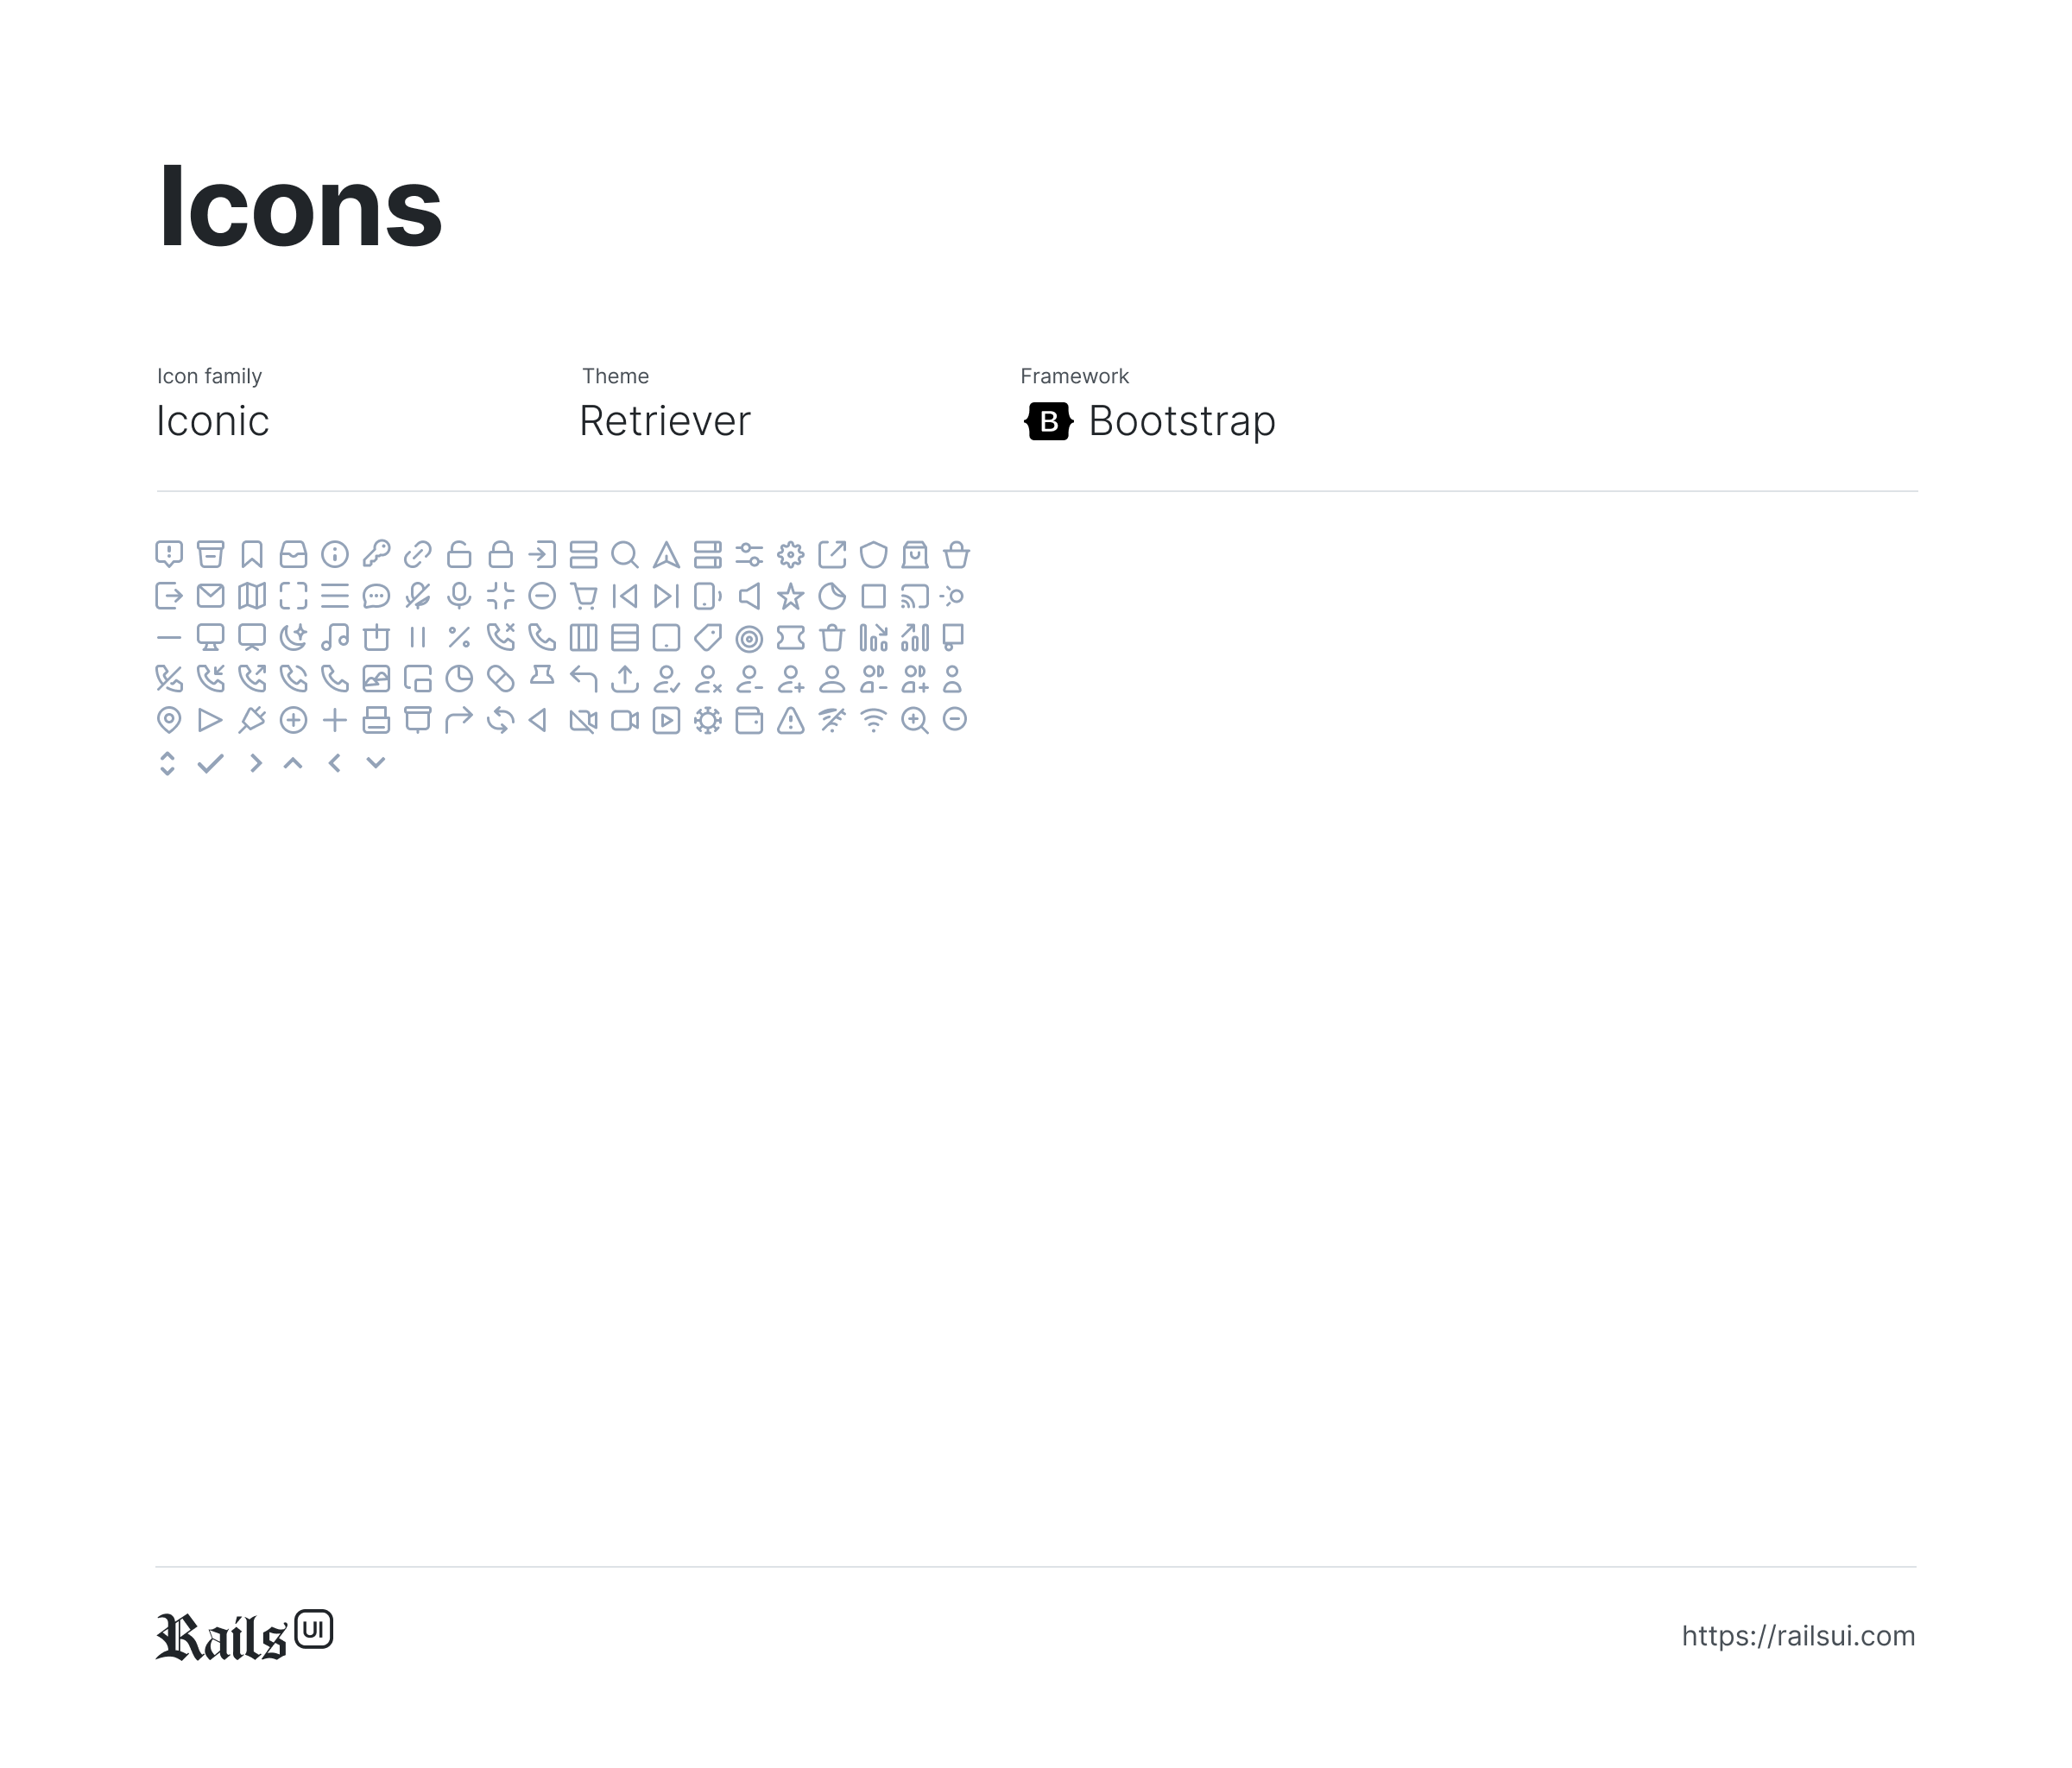 Rails UI Retriever theme icons example (Heroicons)